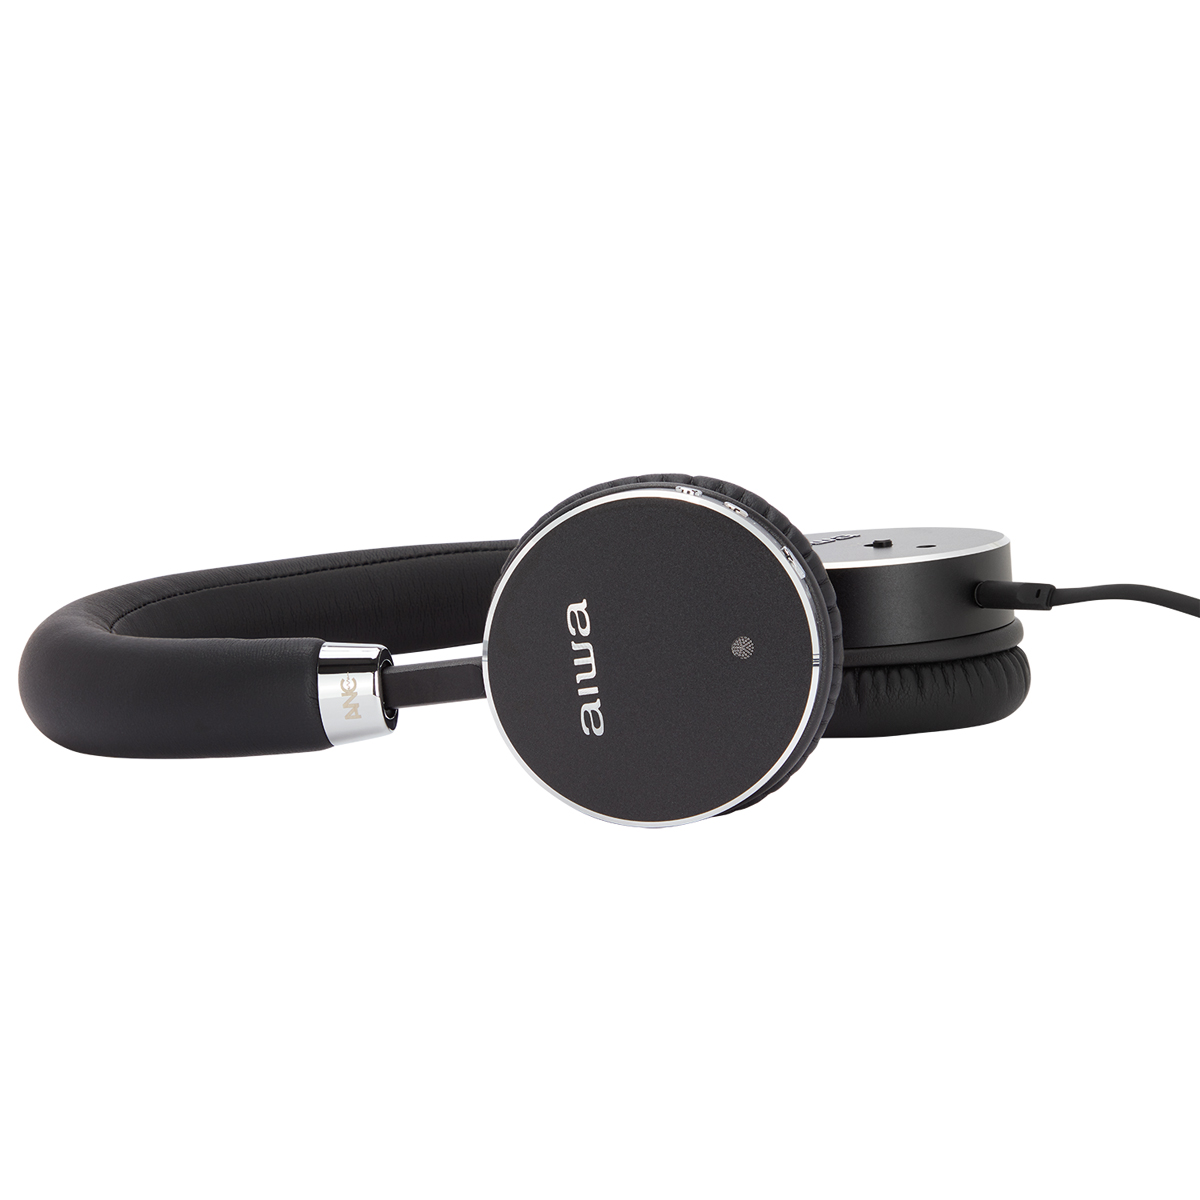 AIWA HSTBTN-800BK, On-ear ANC Kopfhörer Bluetooth Schwarz